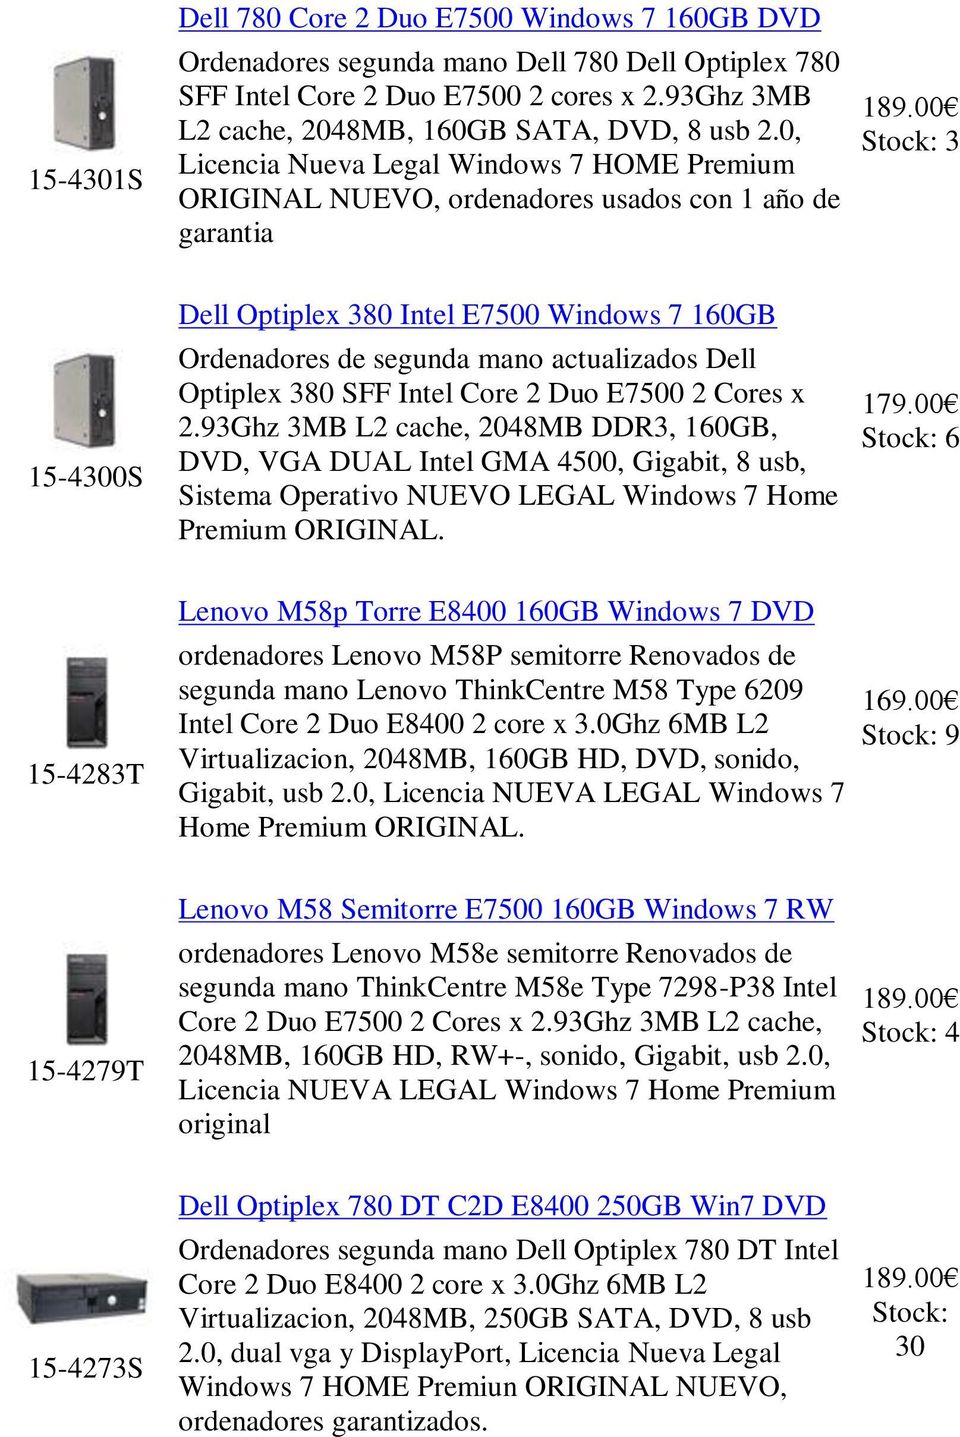 00 3 15-4300S Dell Optiplex 380 Intel E7500 Windows 7 160GB Ordenadores de segunda mano actualizados Dell Optiplex 380 SFF Intel Core 2 Duo E7500 2 Cores x 2.